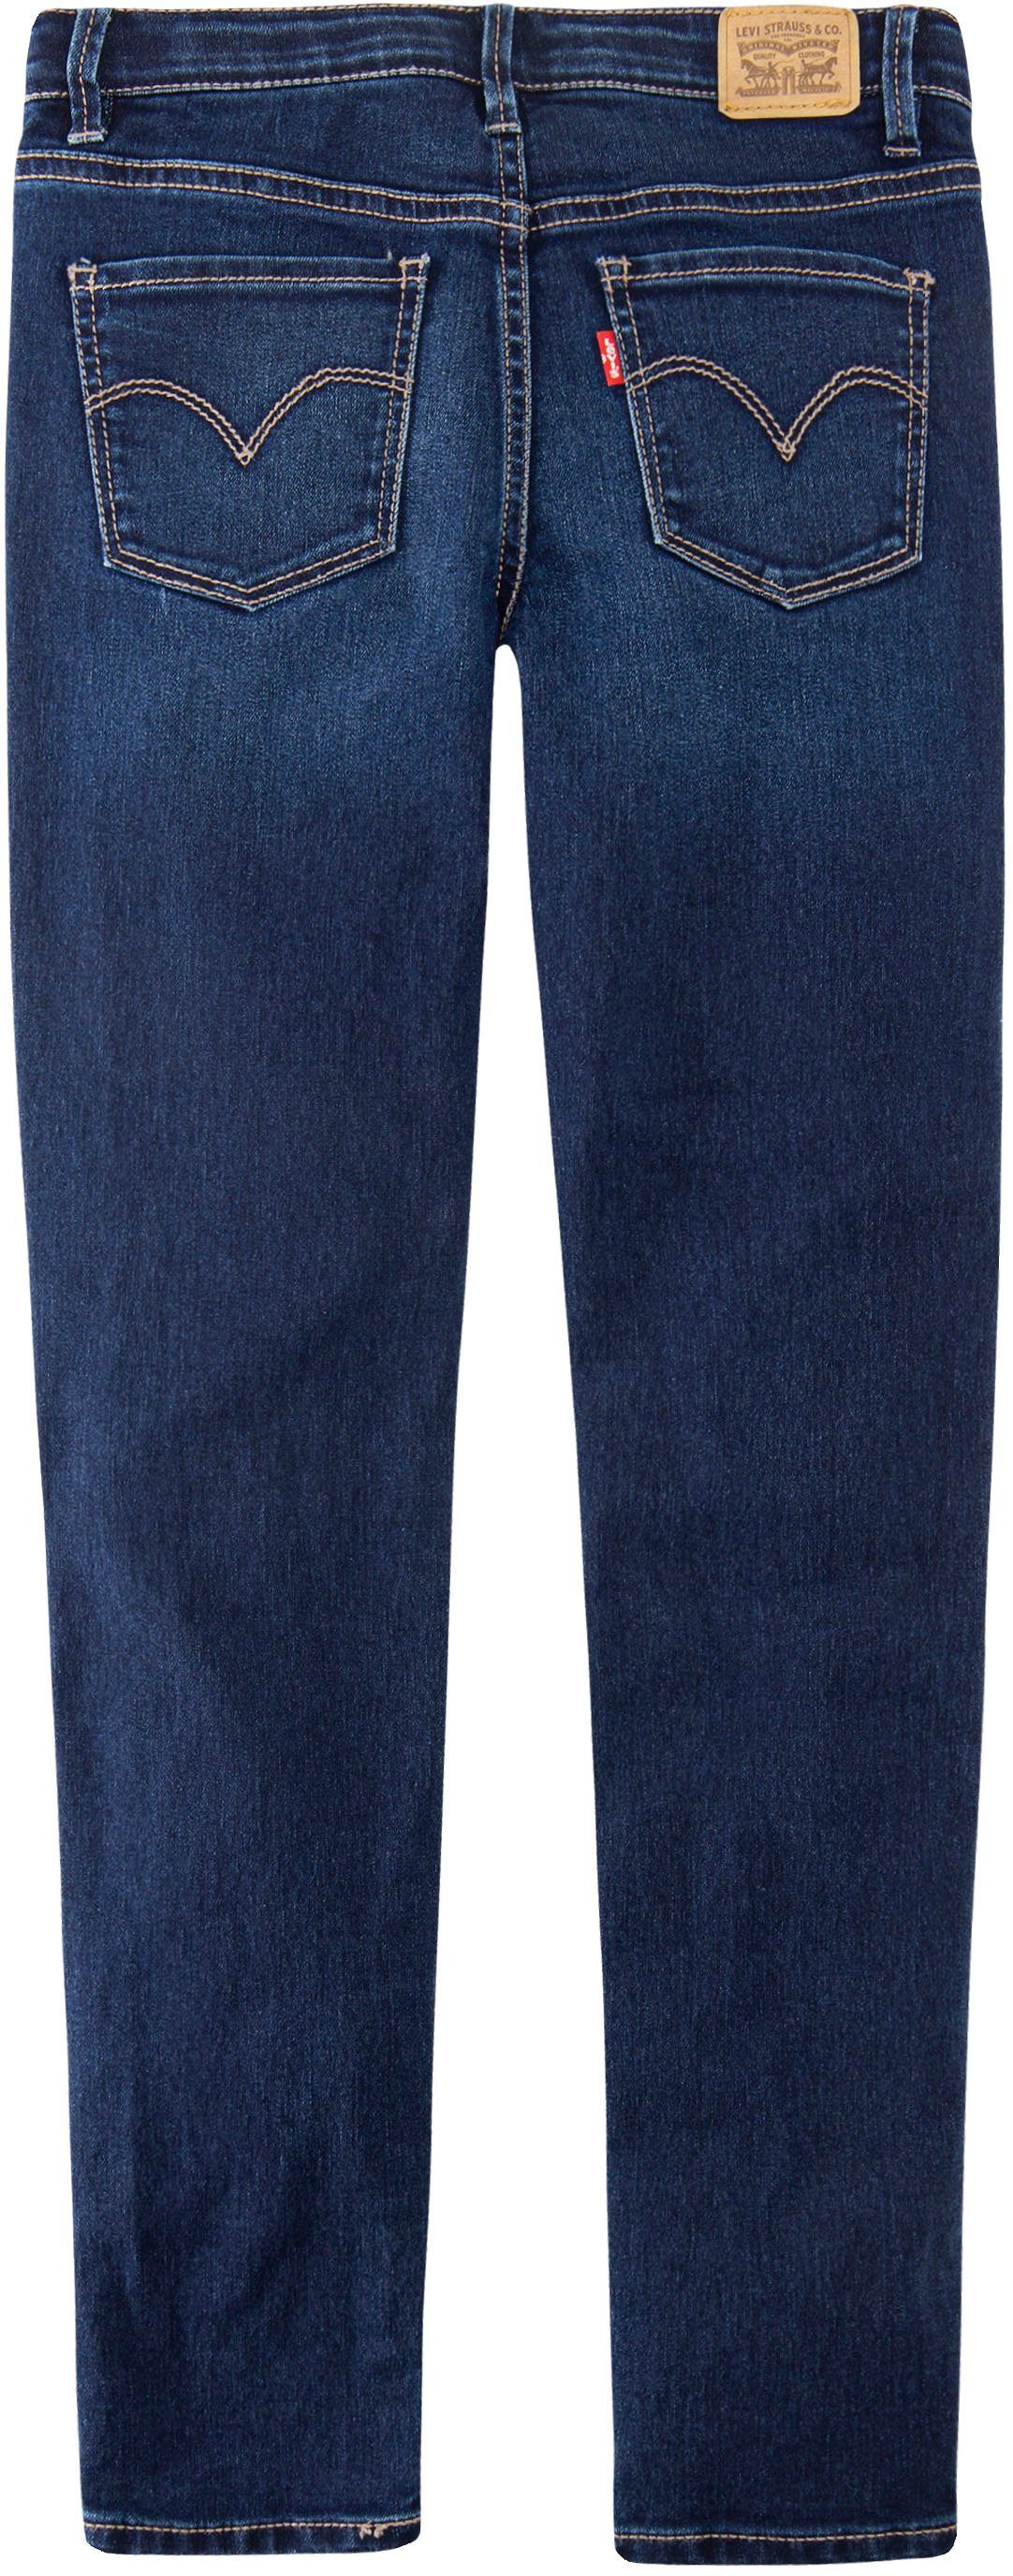 Kids GIRLS denim Stretch-Jeans dark blue FIT JEANS for used SUPER SKINNY 710™ Levi's®